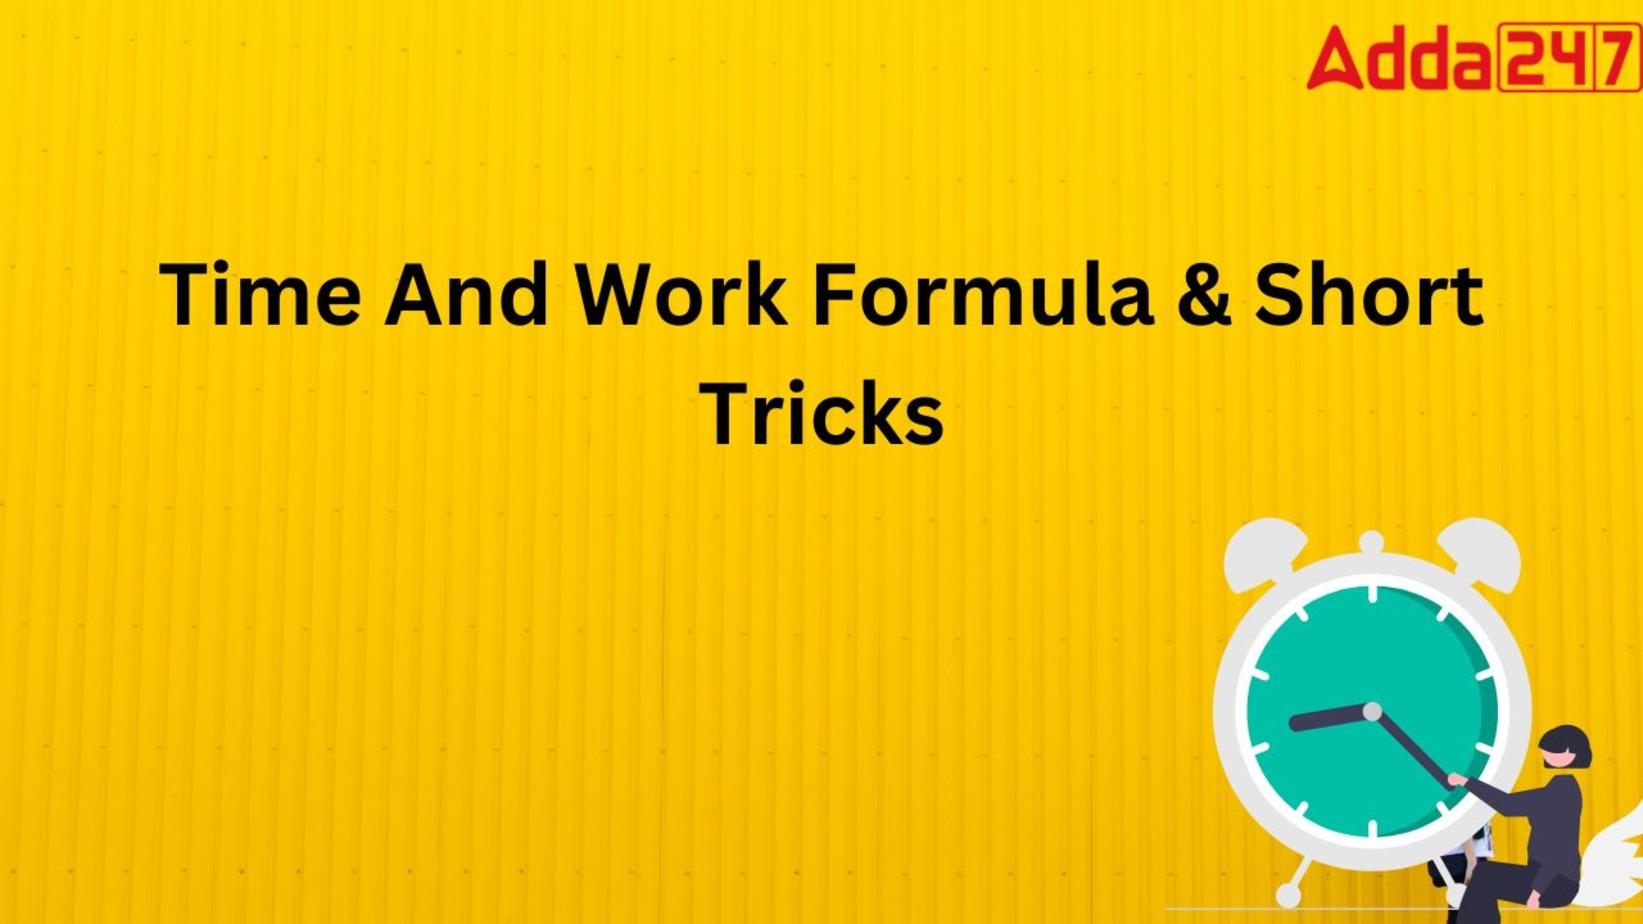 Time And Work Formula & Short Tricks (1)